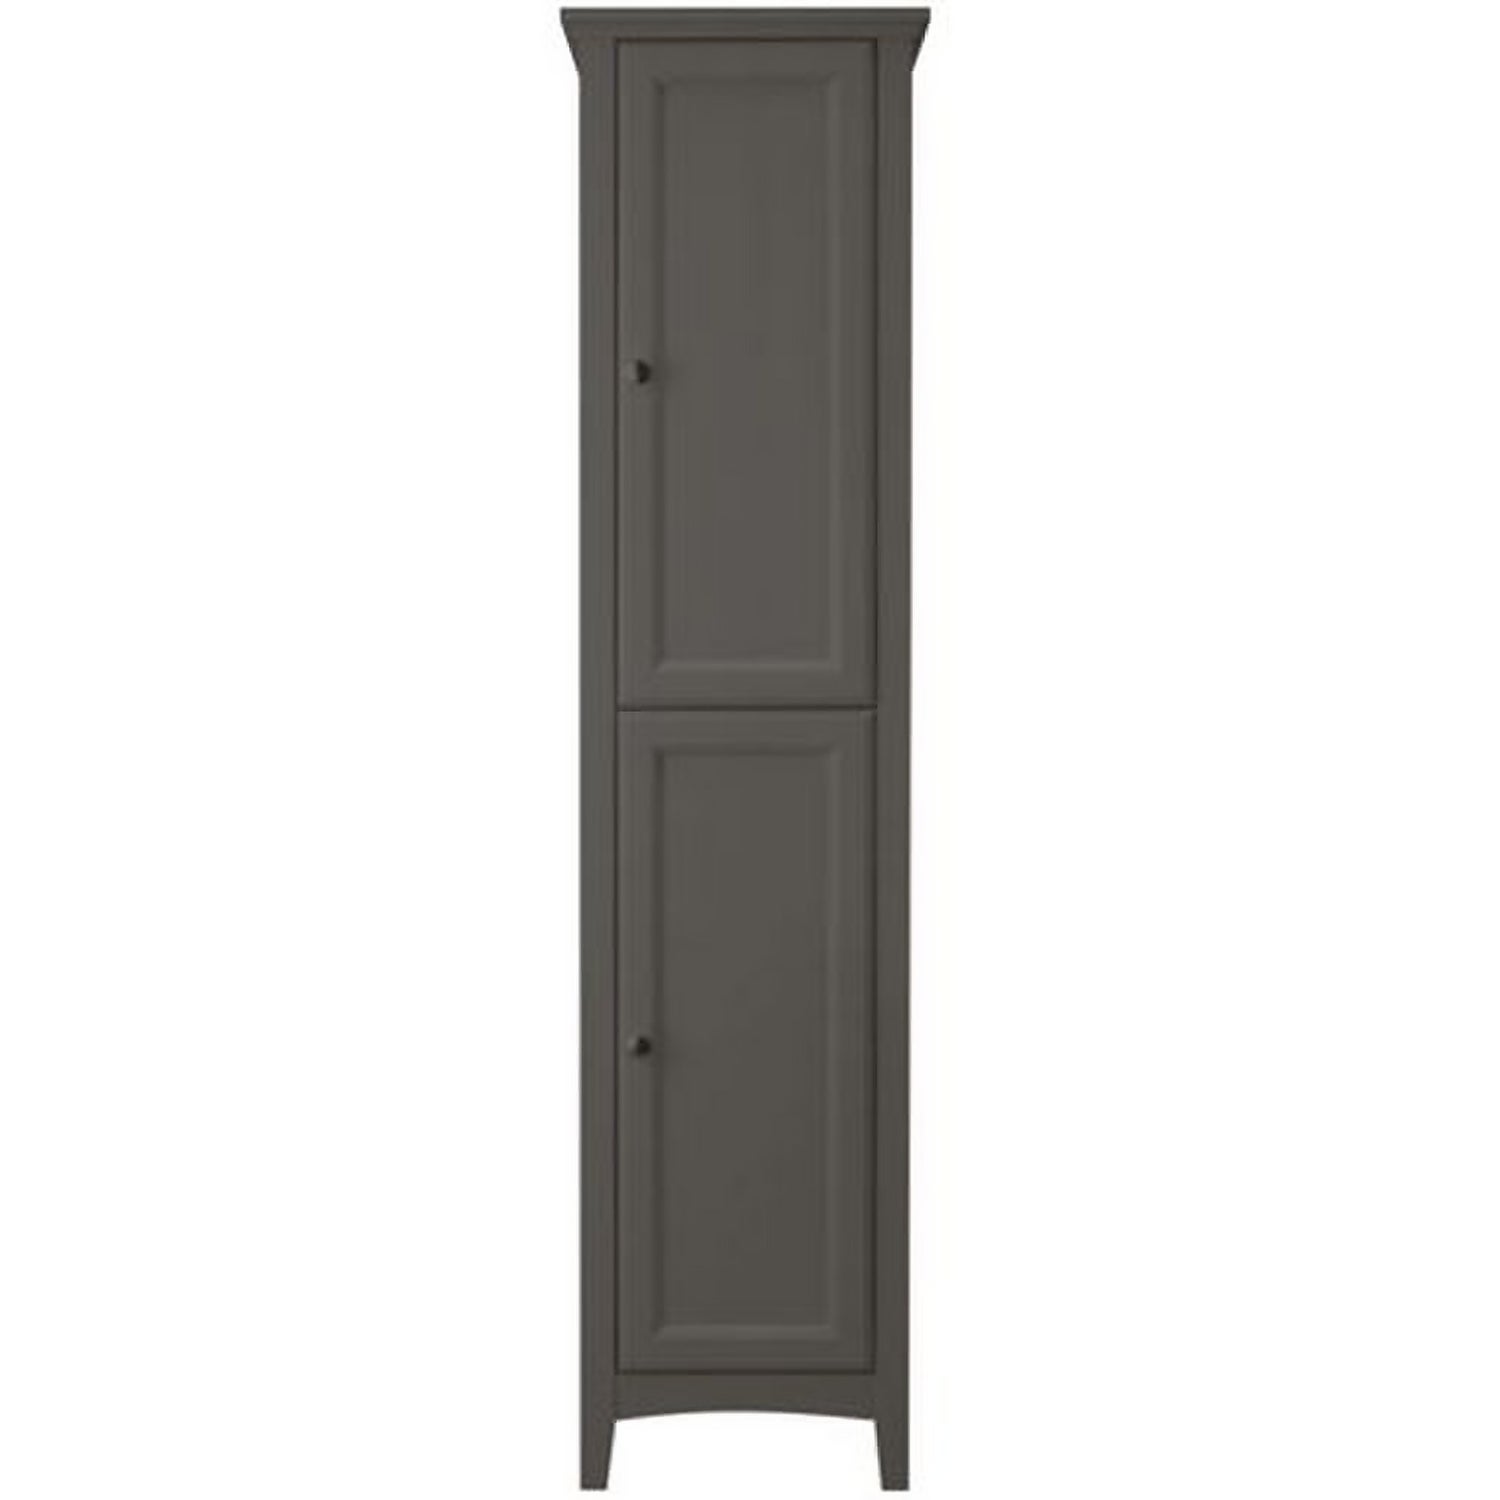 Savoy 400mm Tall Floorstanding Storage Cabinet - Charcoal Grey